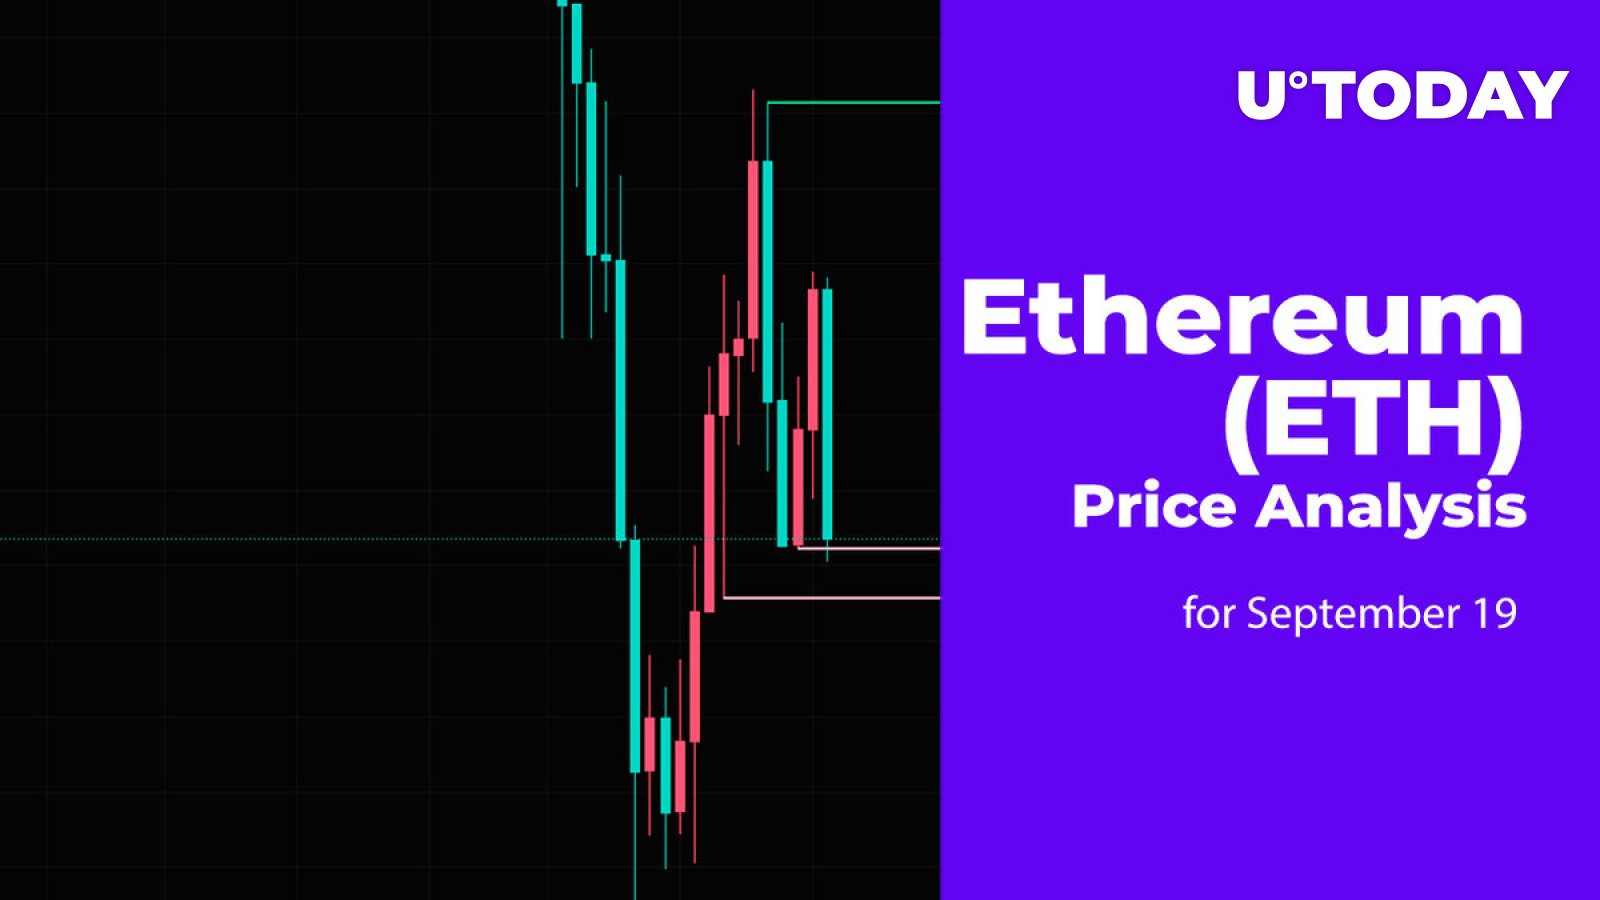 Ethereum (ETH) Price Analysis for September 19